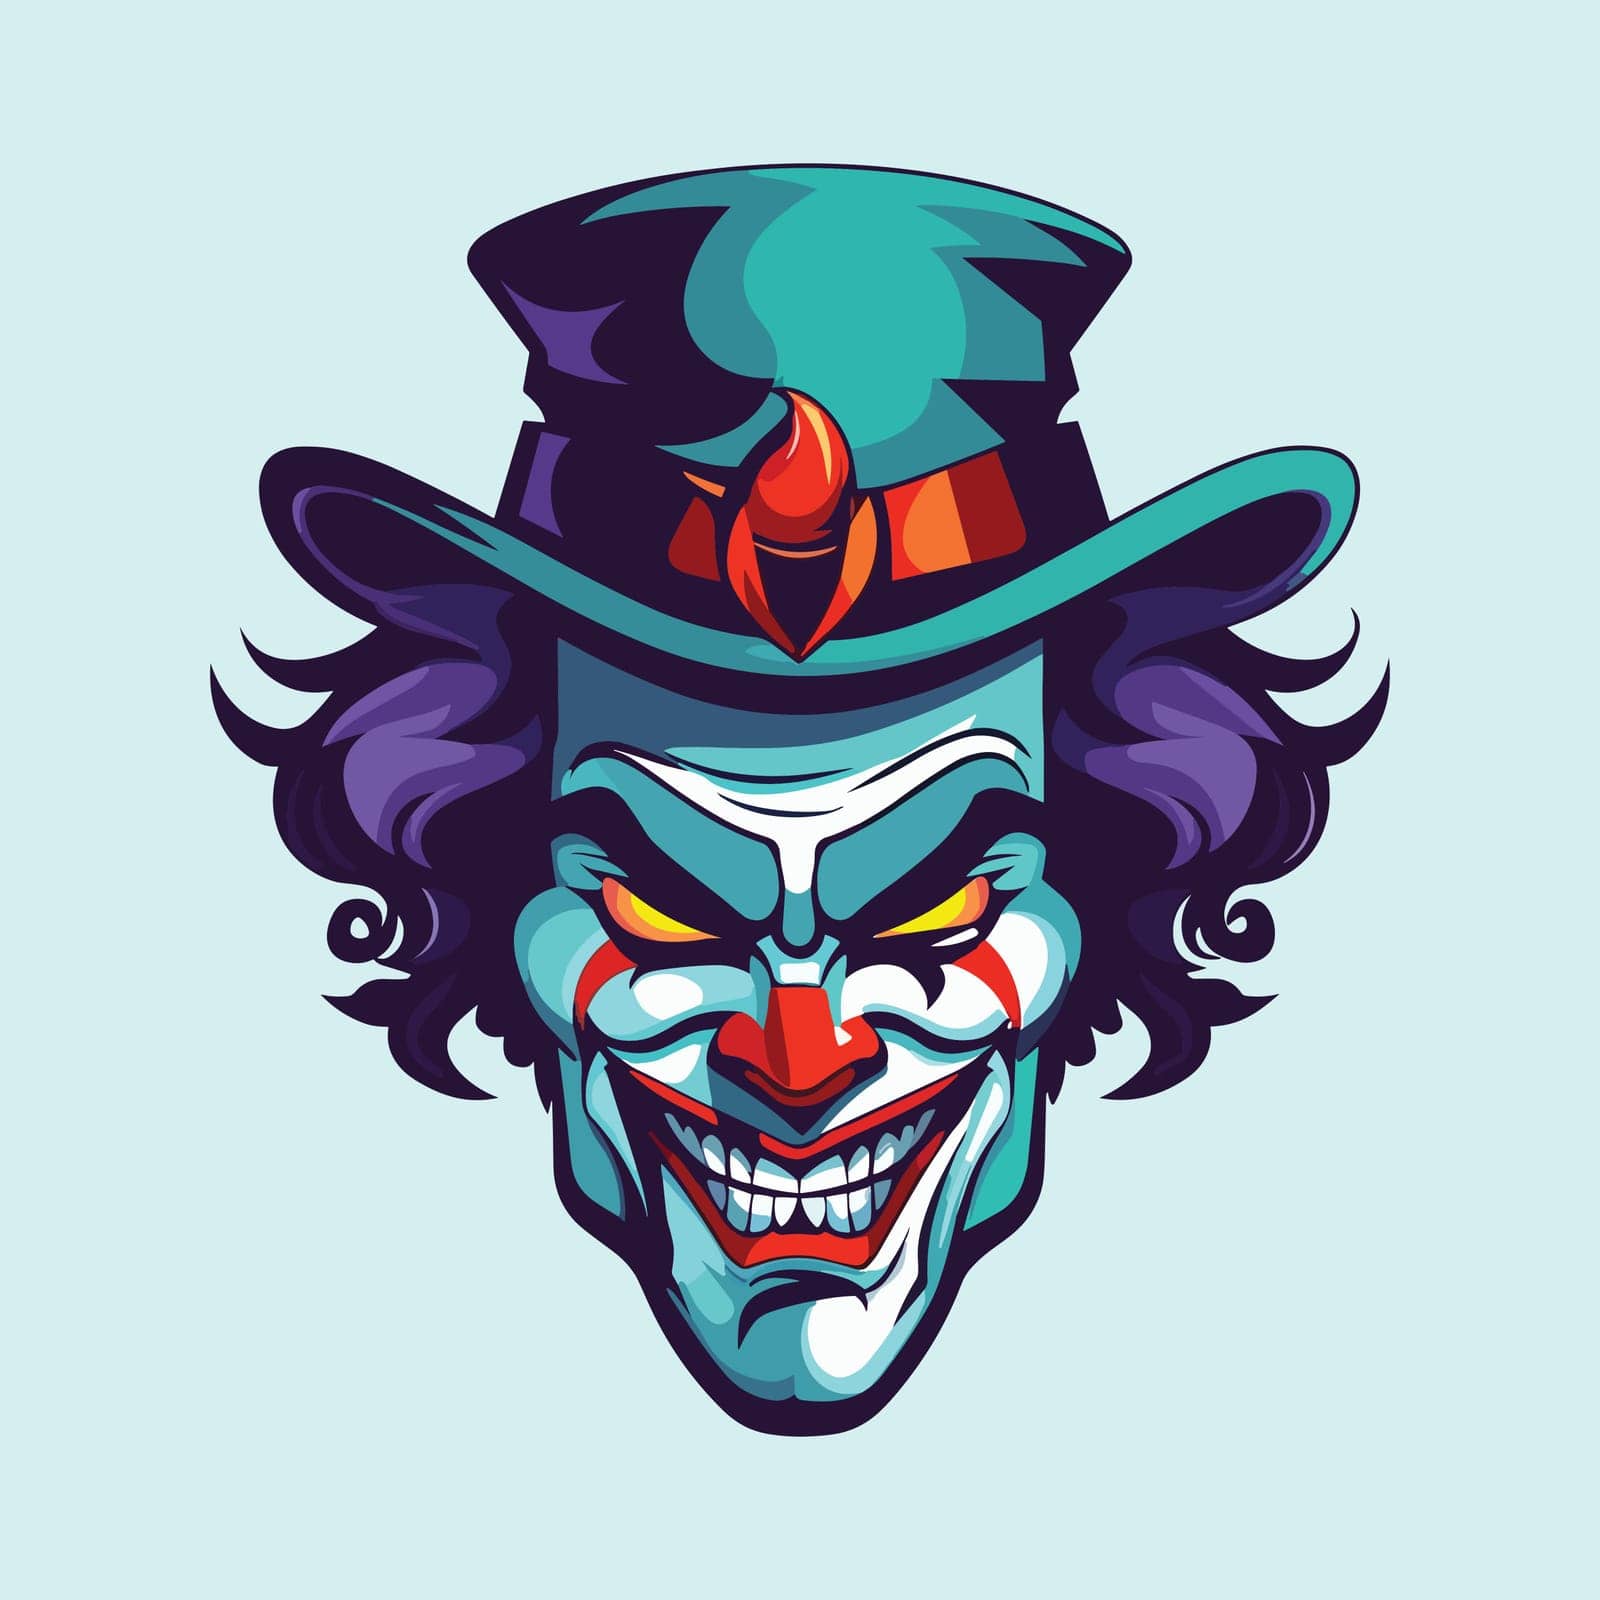 Joker esport logo mascot design by Vinhsino